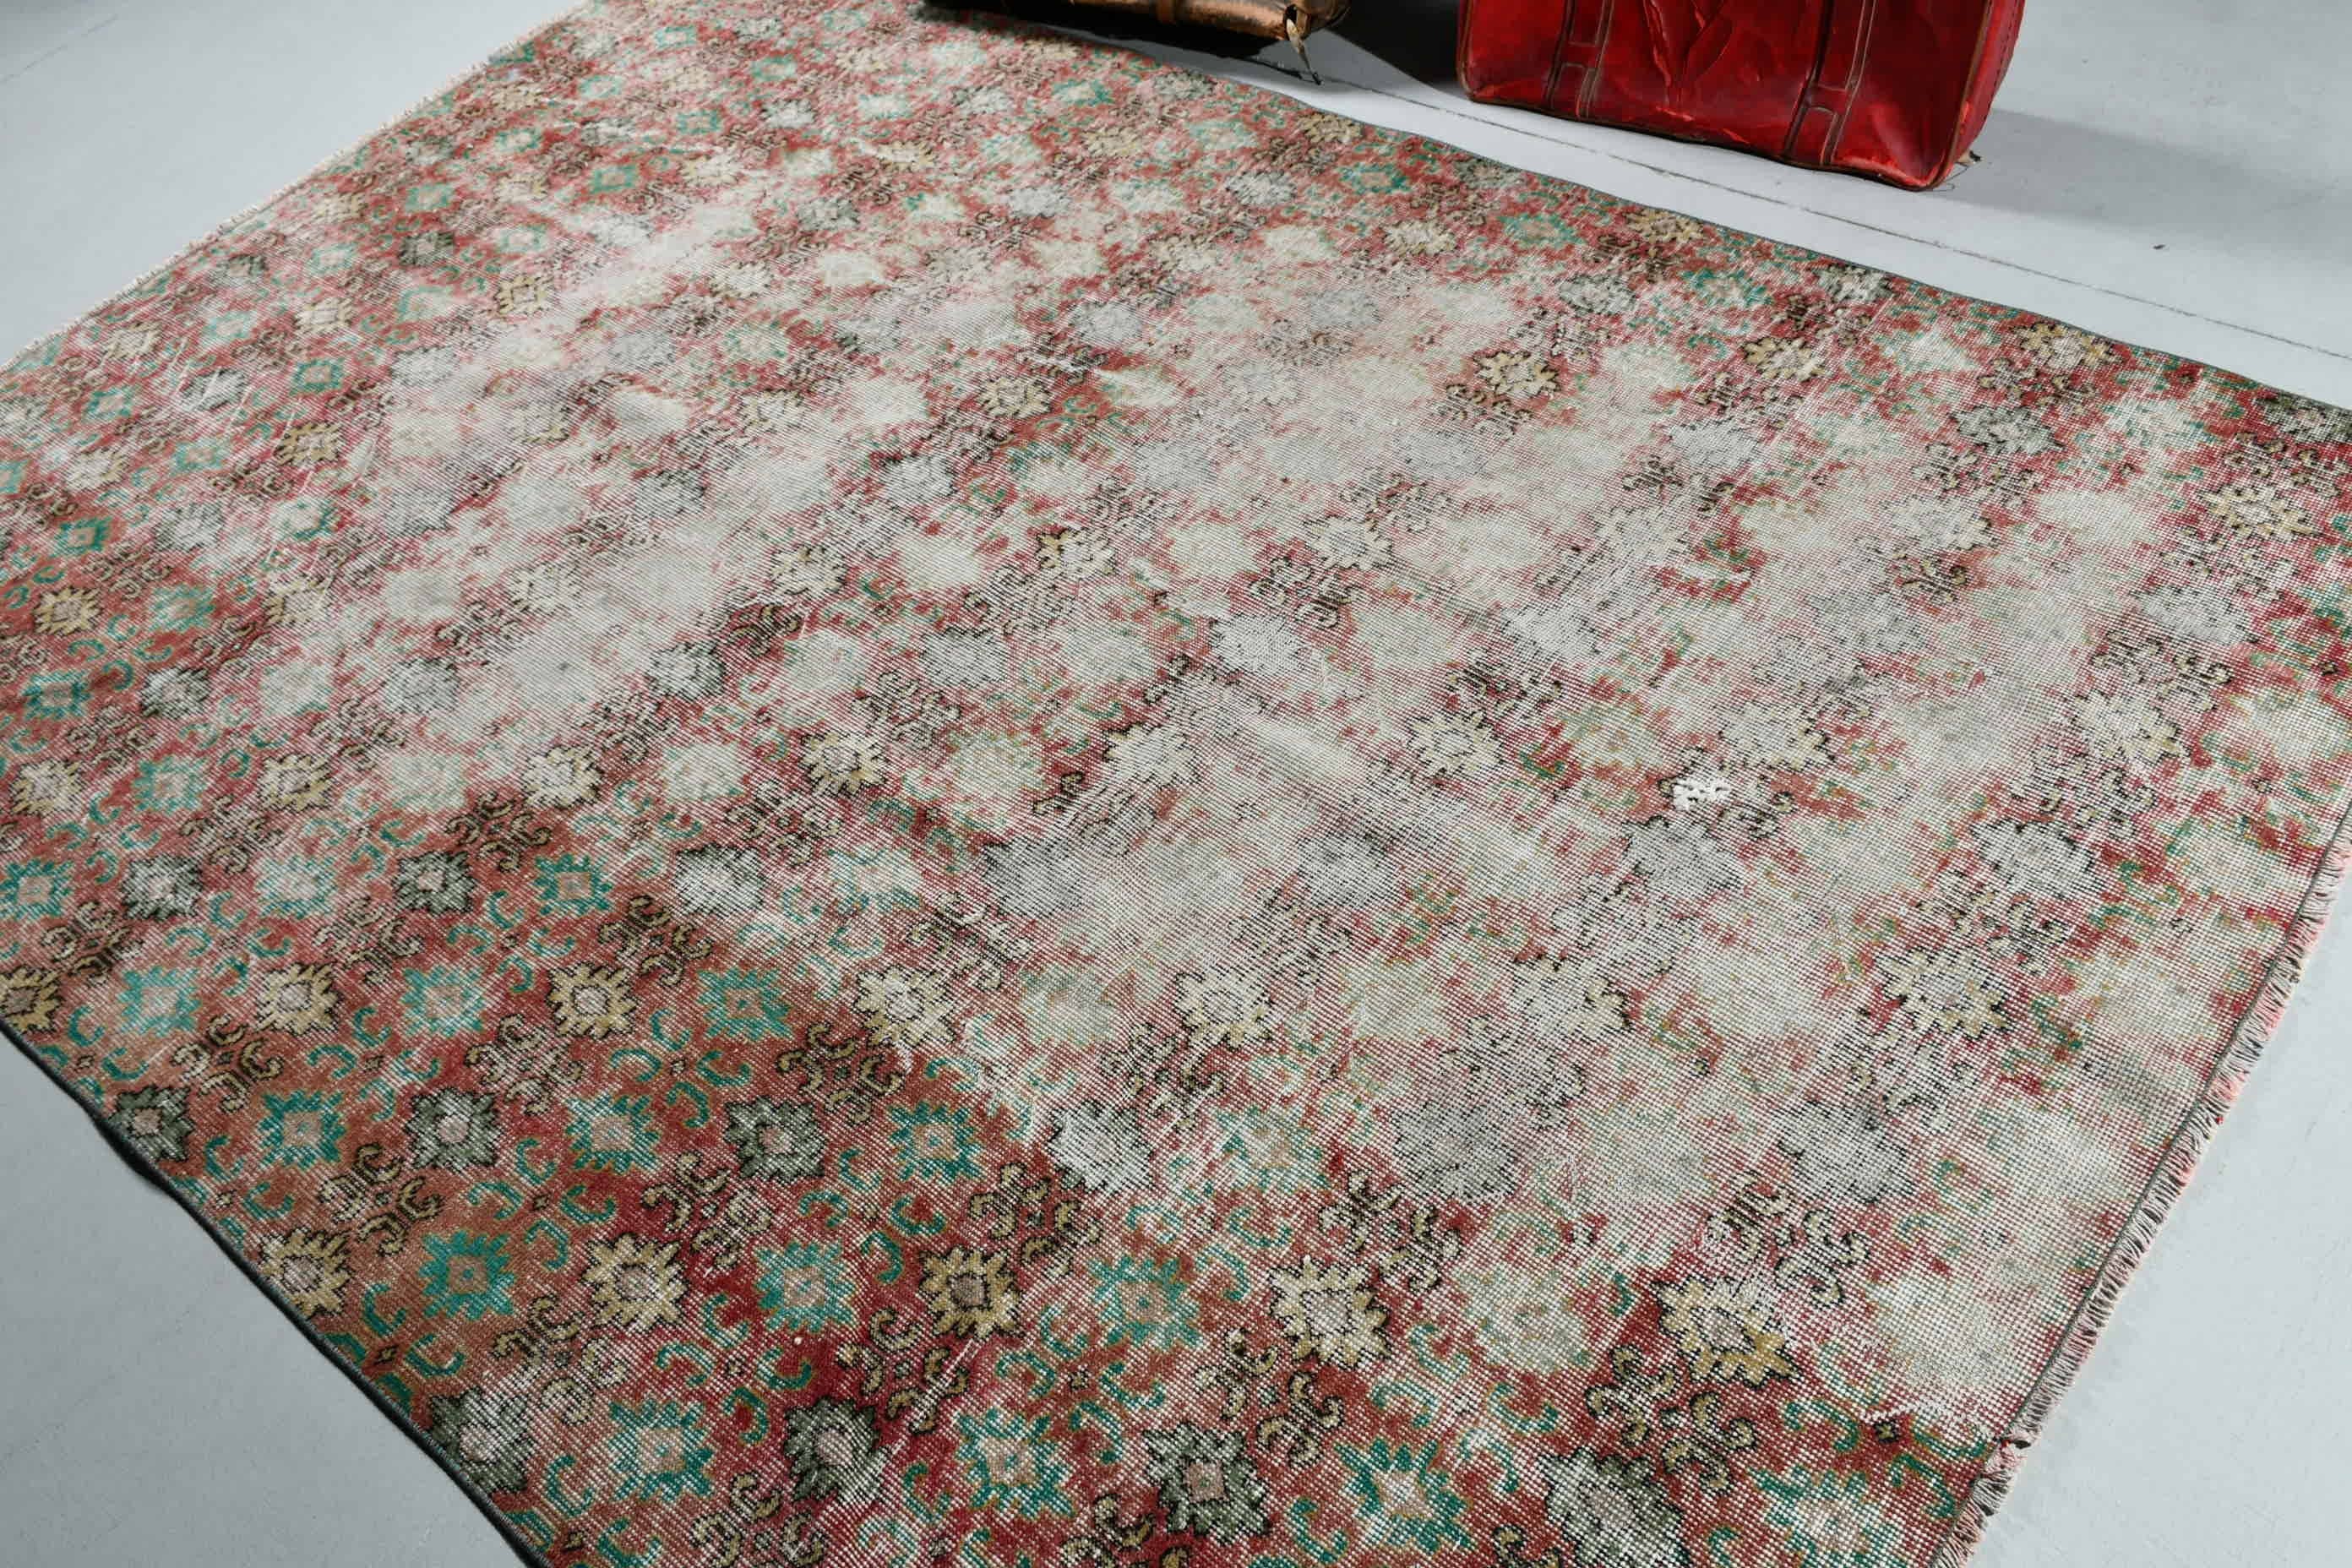 6x9.1 ft Large Rugs, Turkish Rugs, Vintage Rug, Red Wool Rug, Salon Rug, Rugs for Bedroom, Moroccan Rug, Dining Room Rug